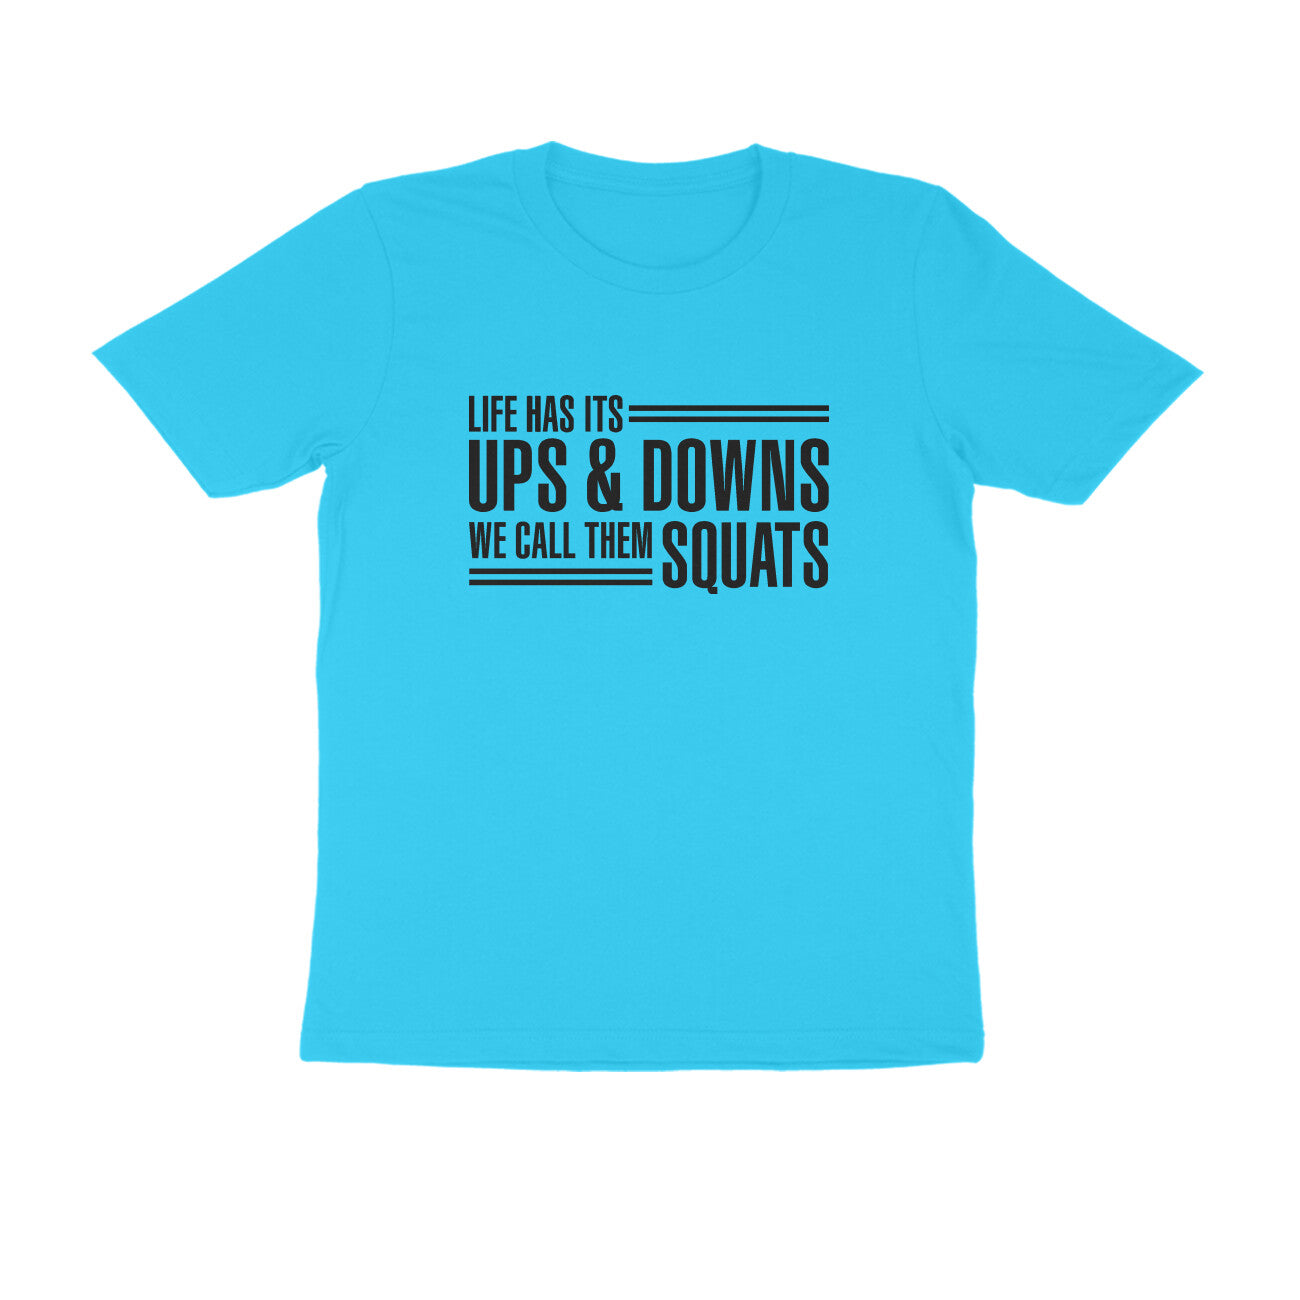 Life has its ups & downs we call them SQUATS.